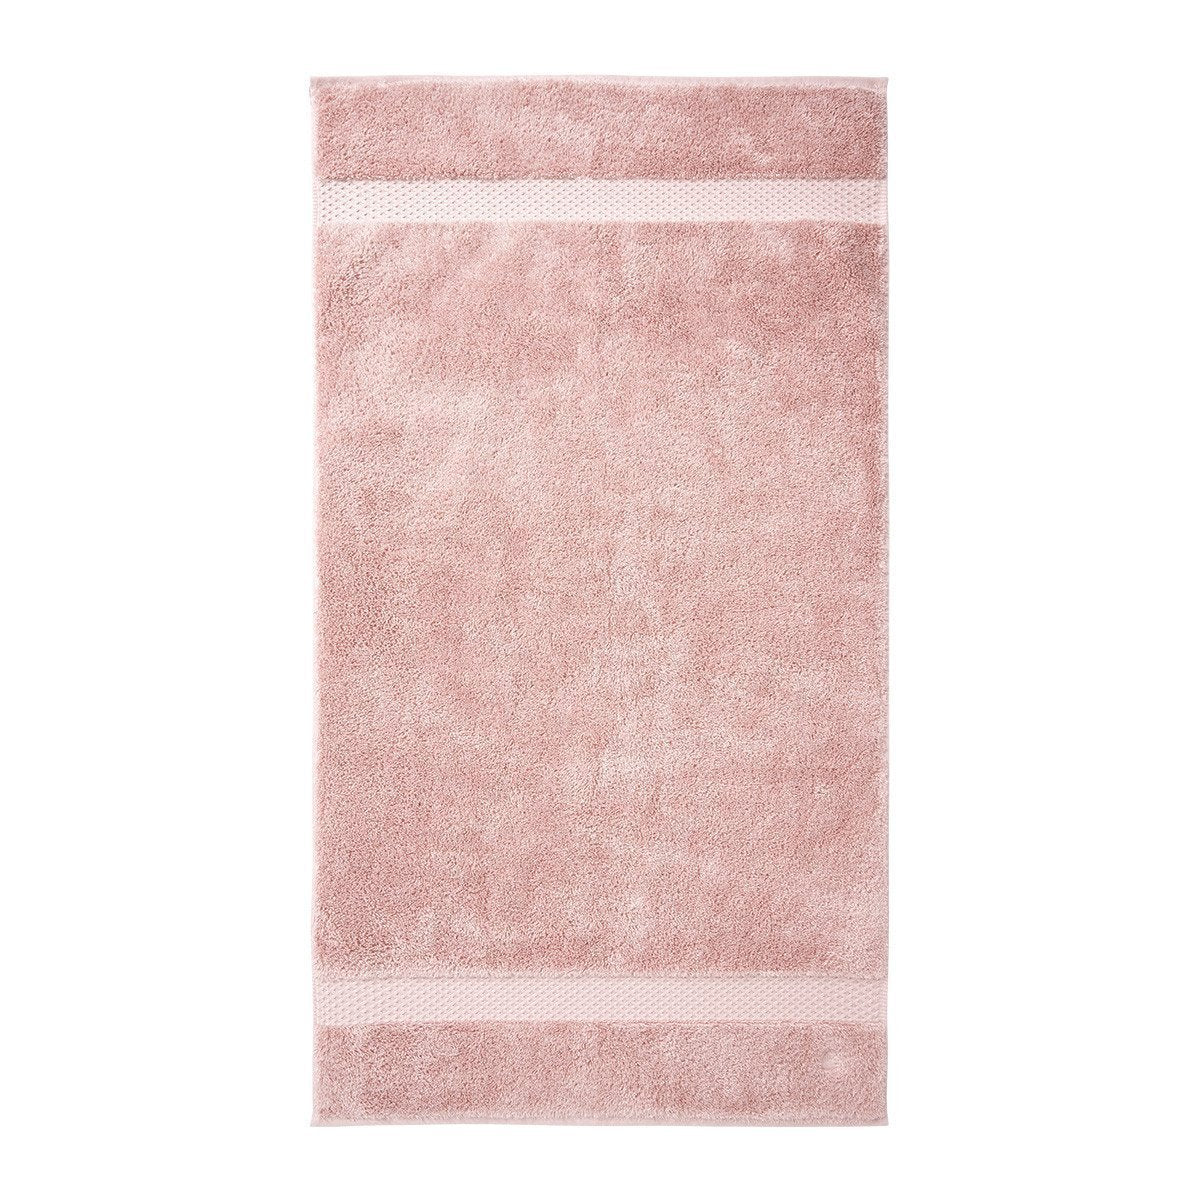 Fig Linens - Yves Delorme Etoile The Bath Towels - Rose pink bath towel, bath sheet